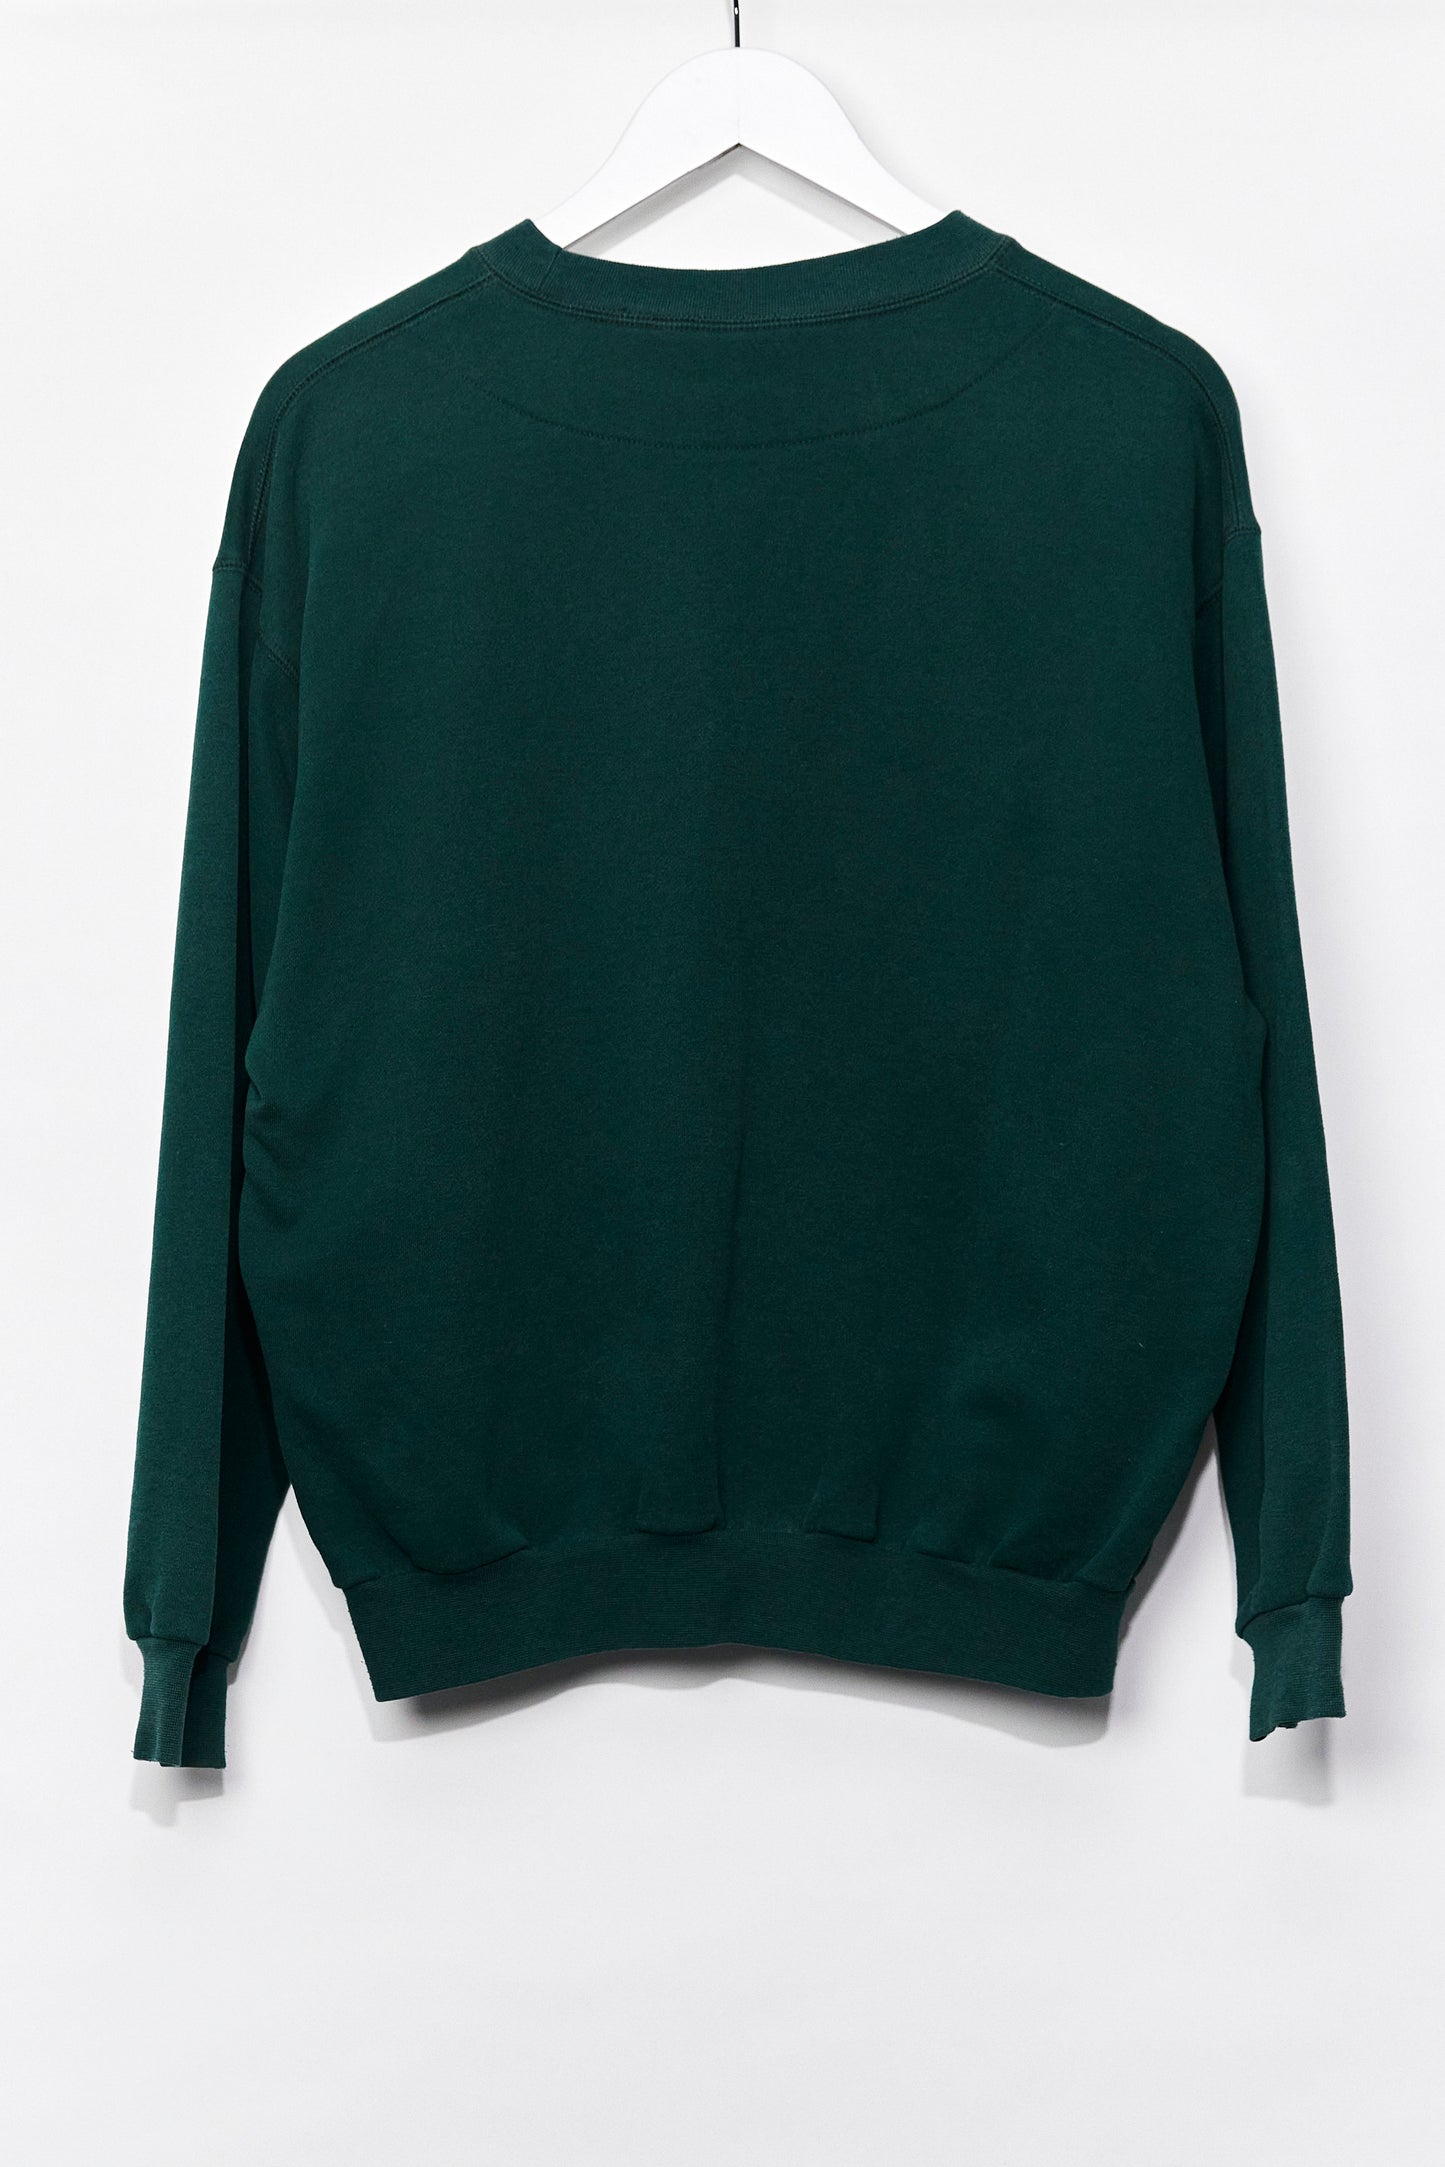 Mens Dark Green Sweatshirt size Small